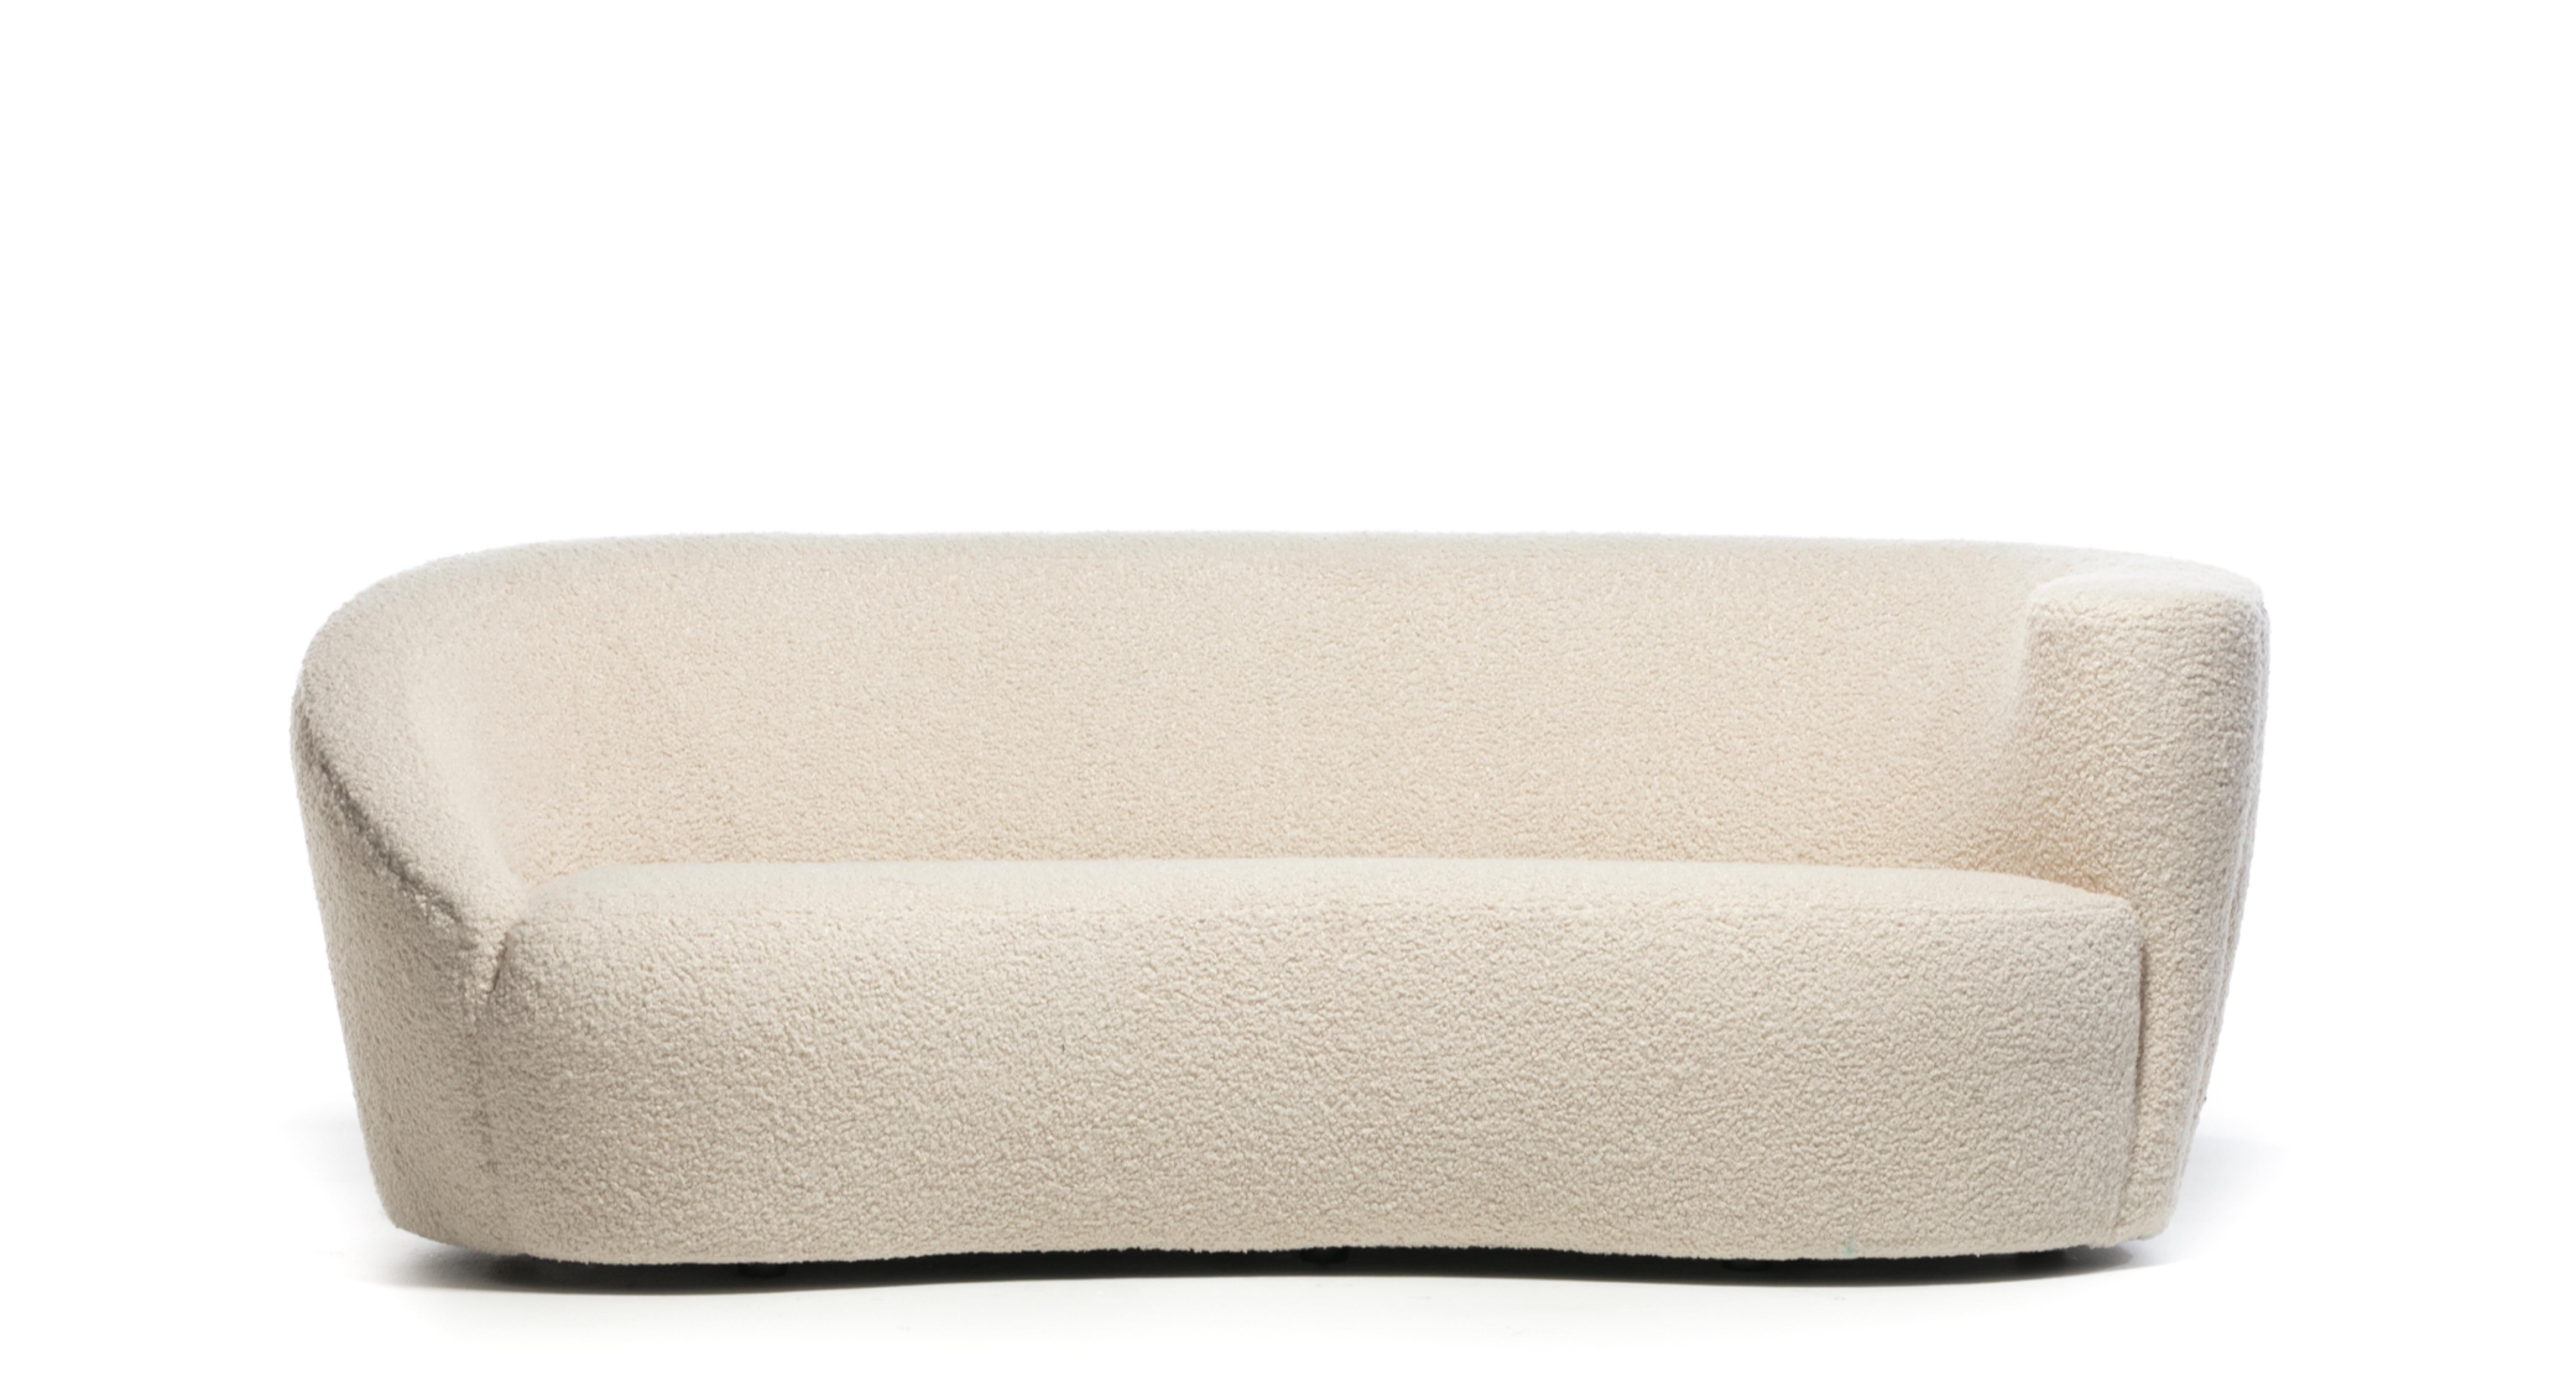 Upholstery Vladimir Kagan Nautilus Sofa in Ivory White Bouclé by Directional, c. 1990